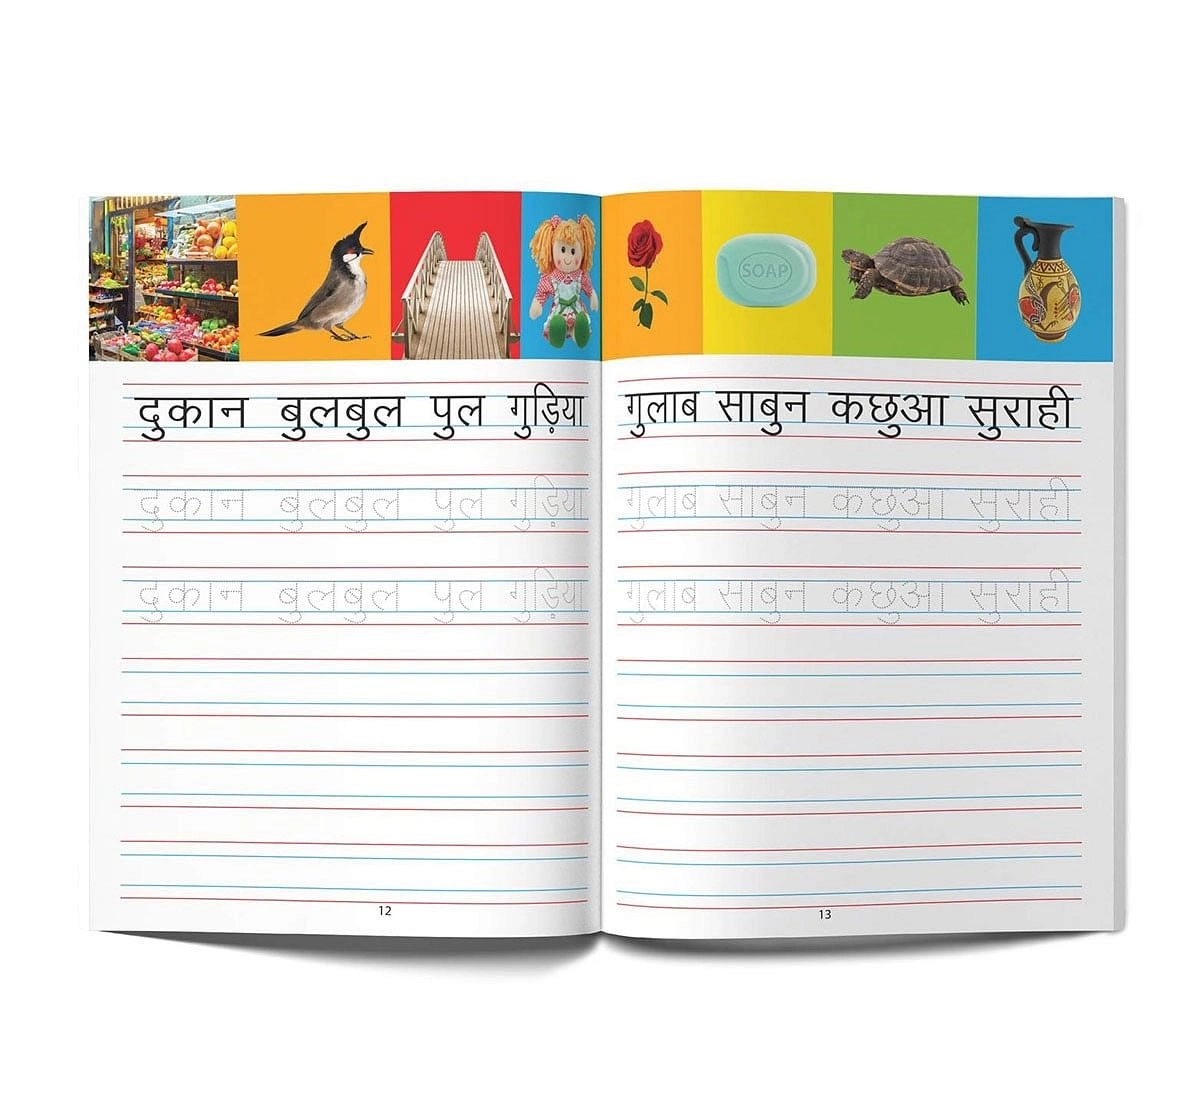 Meri Pratham Hindi Sulekh Boxset Book, 128 Pages Book By Wonder House Books, Box Set